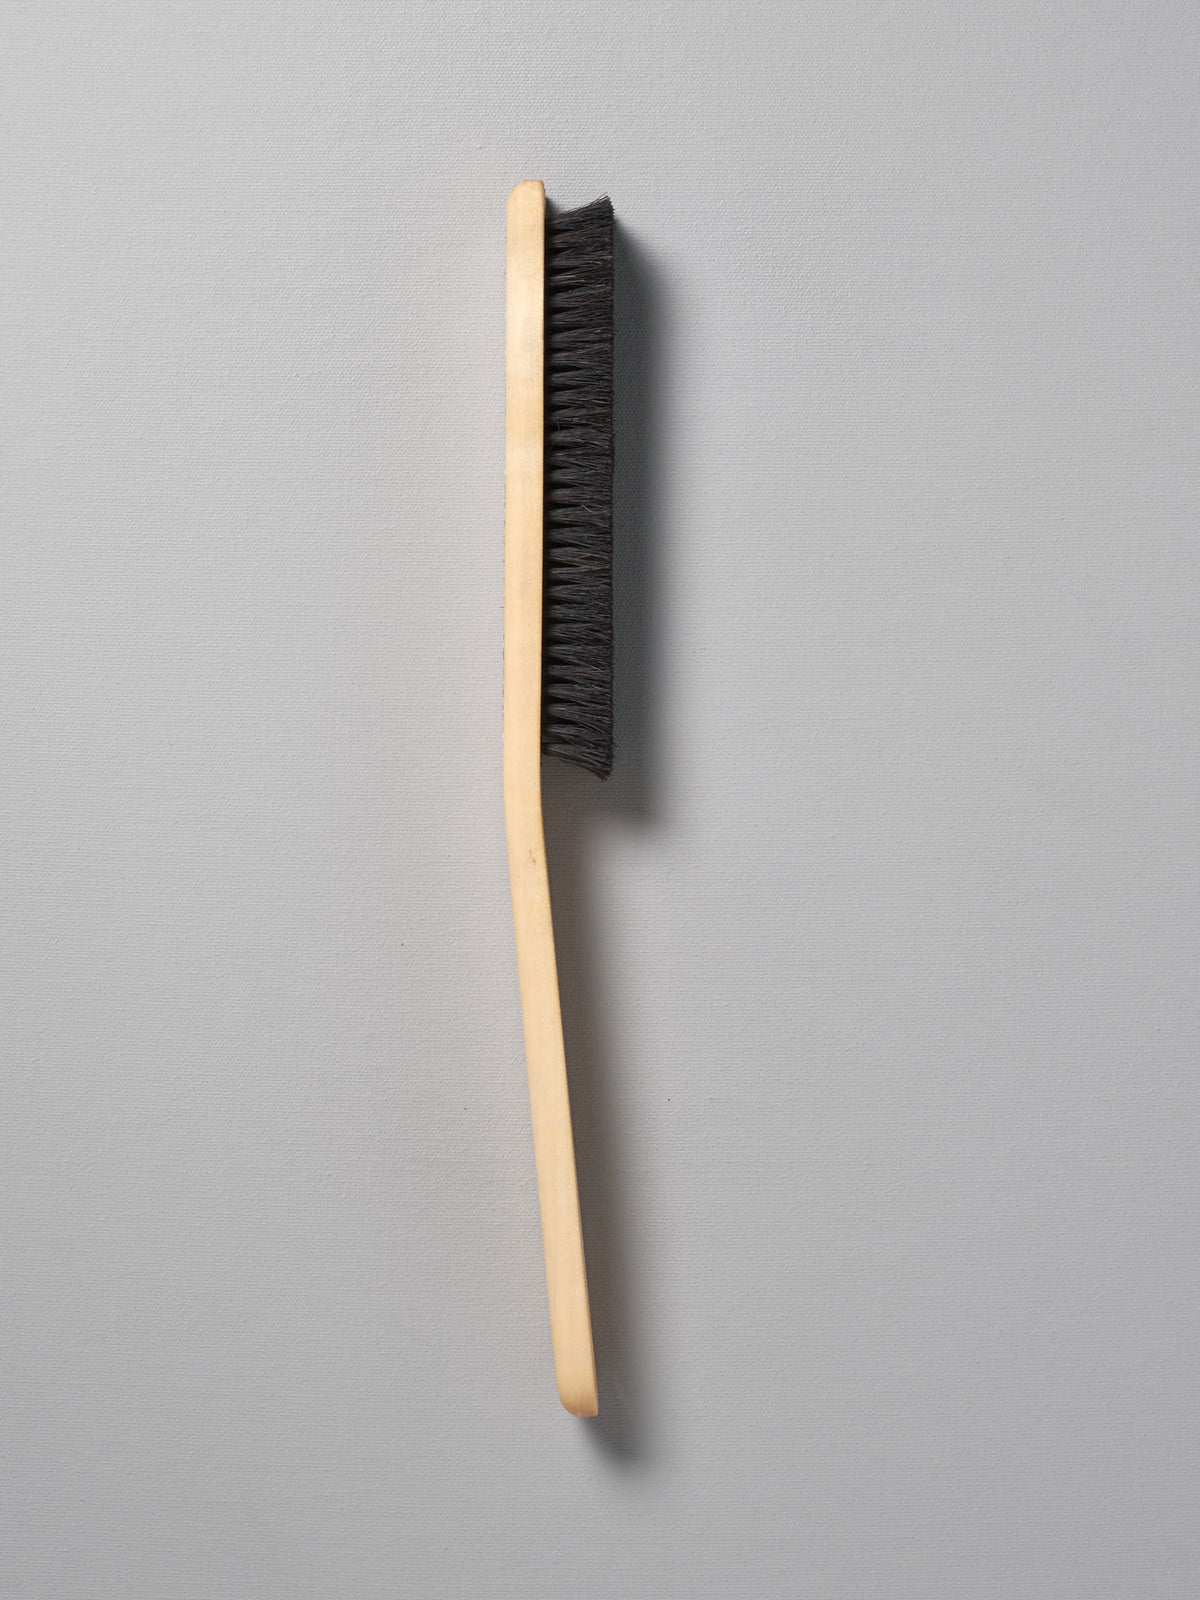 An Iris Hantverk Clothes Brush with black bristles on a gray background.